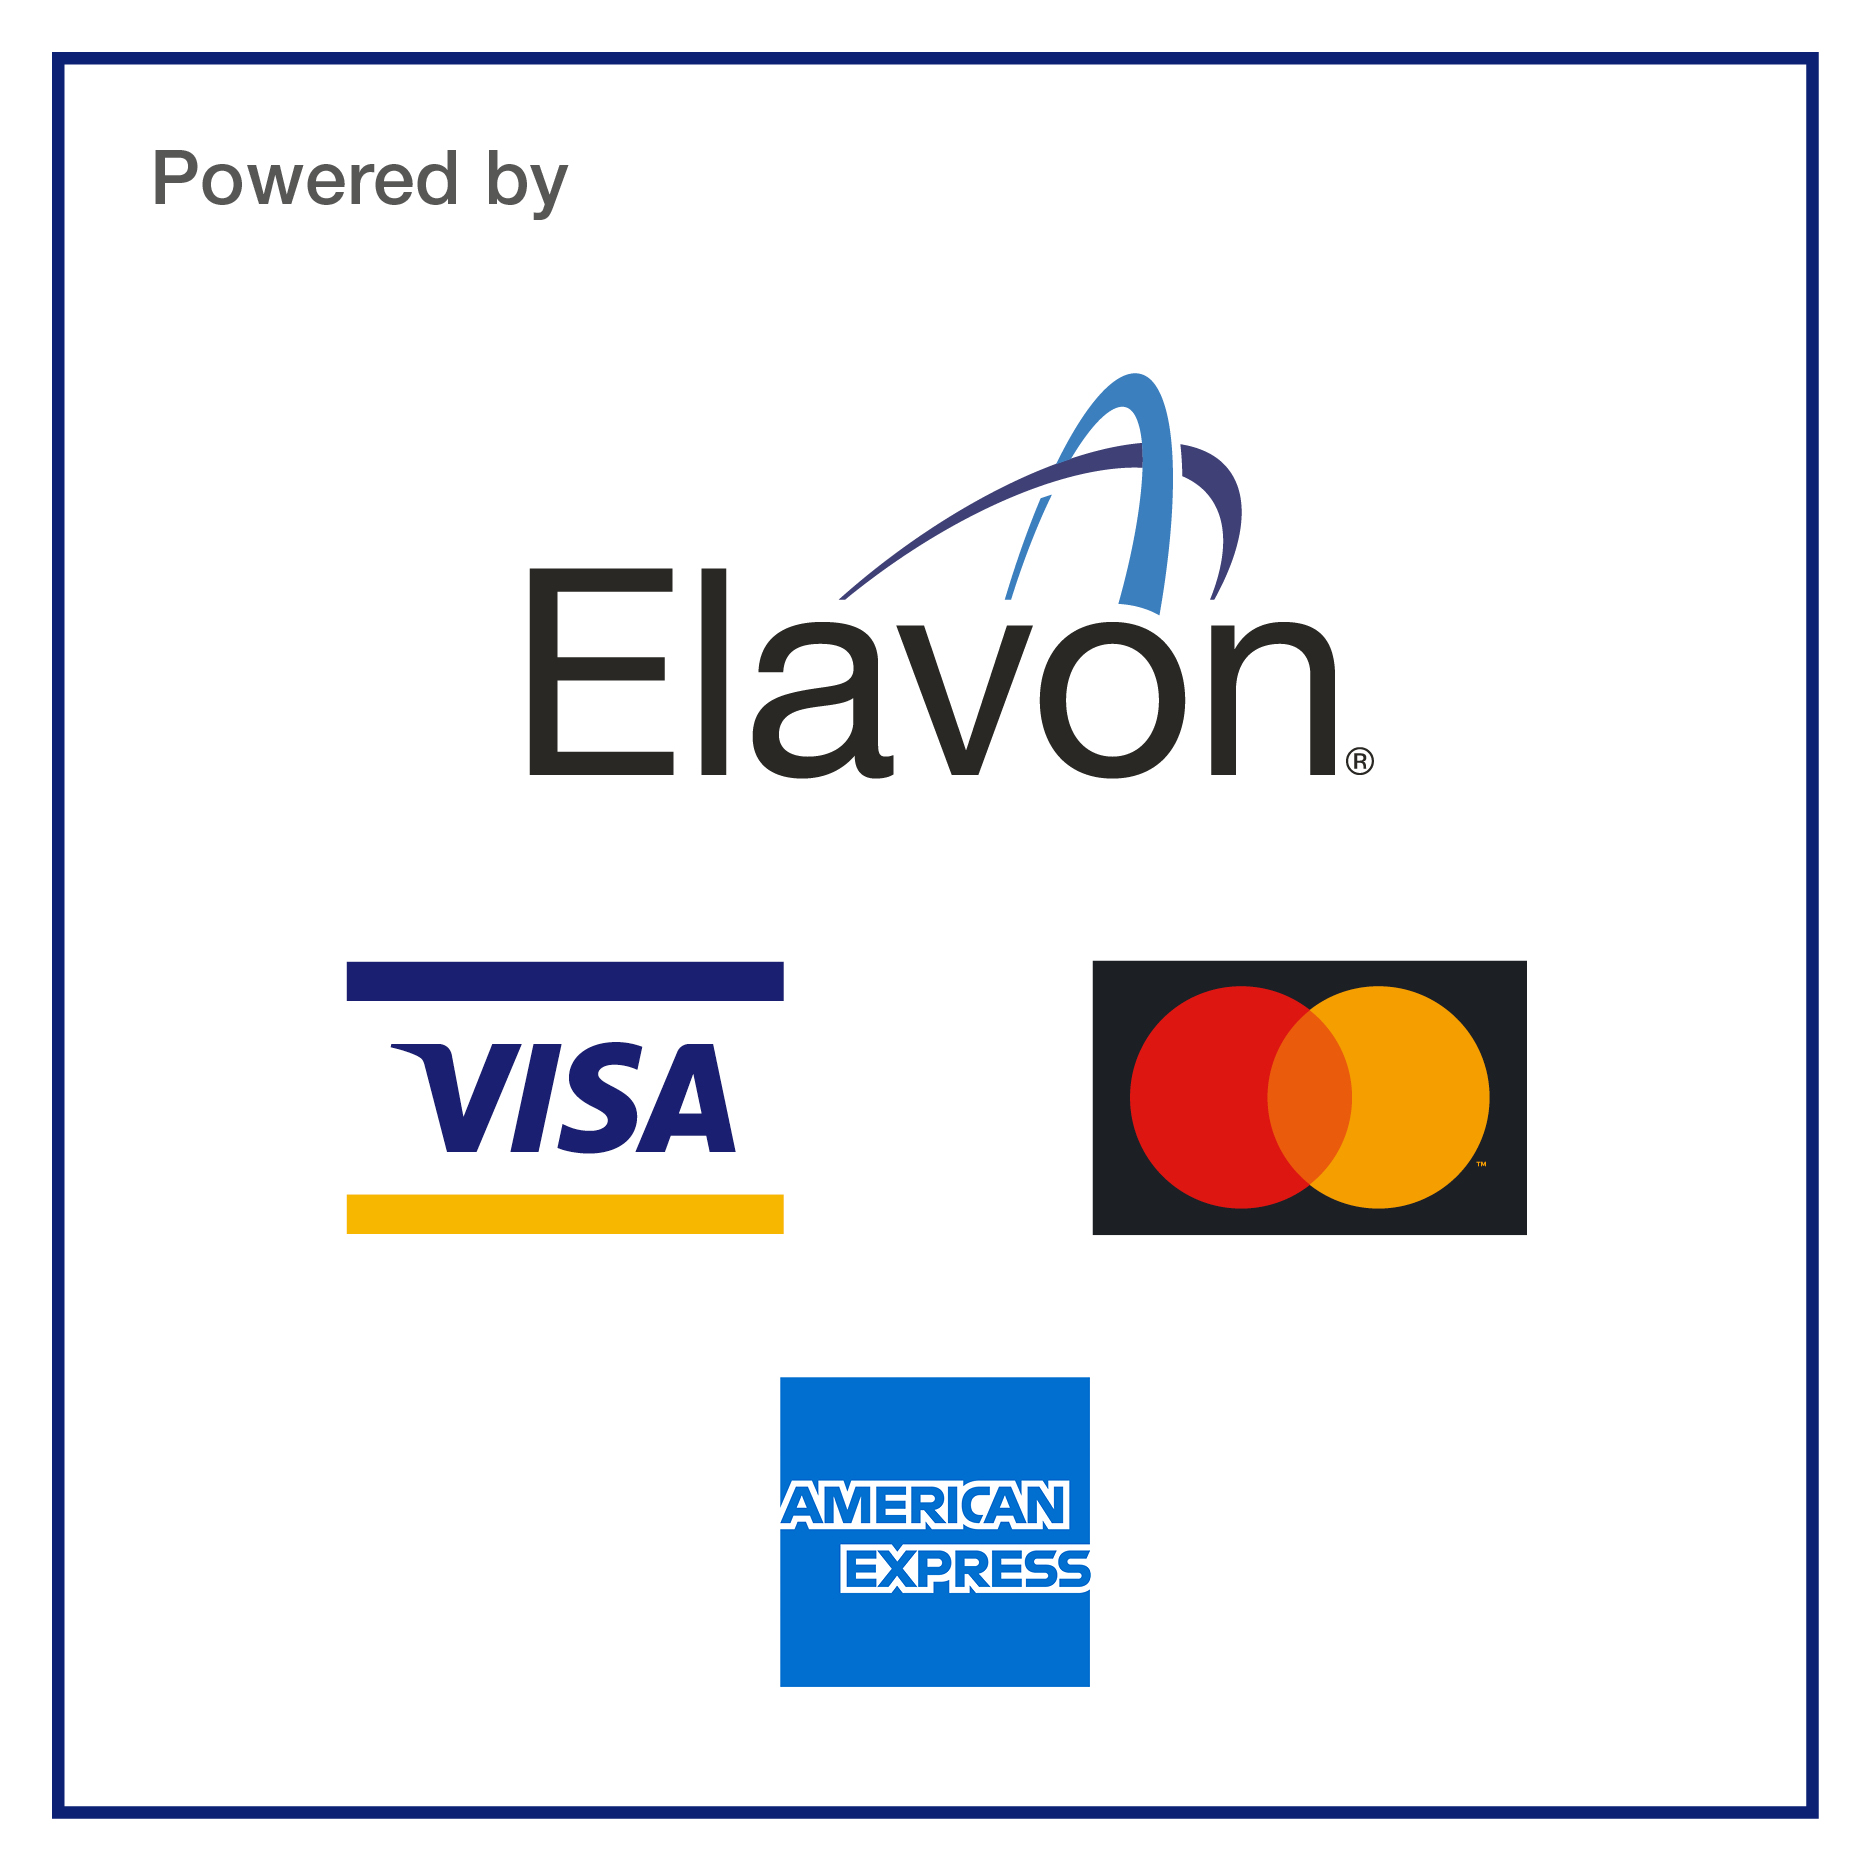 Card scheme logo: Visa, Mastercard, American Express